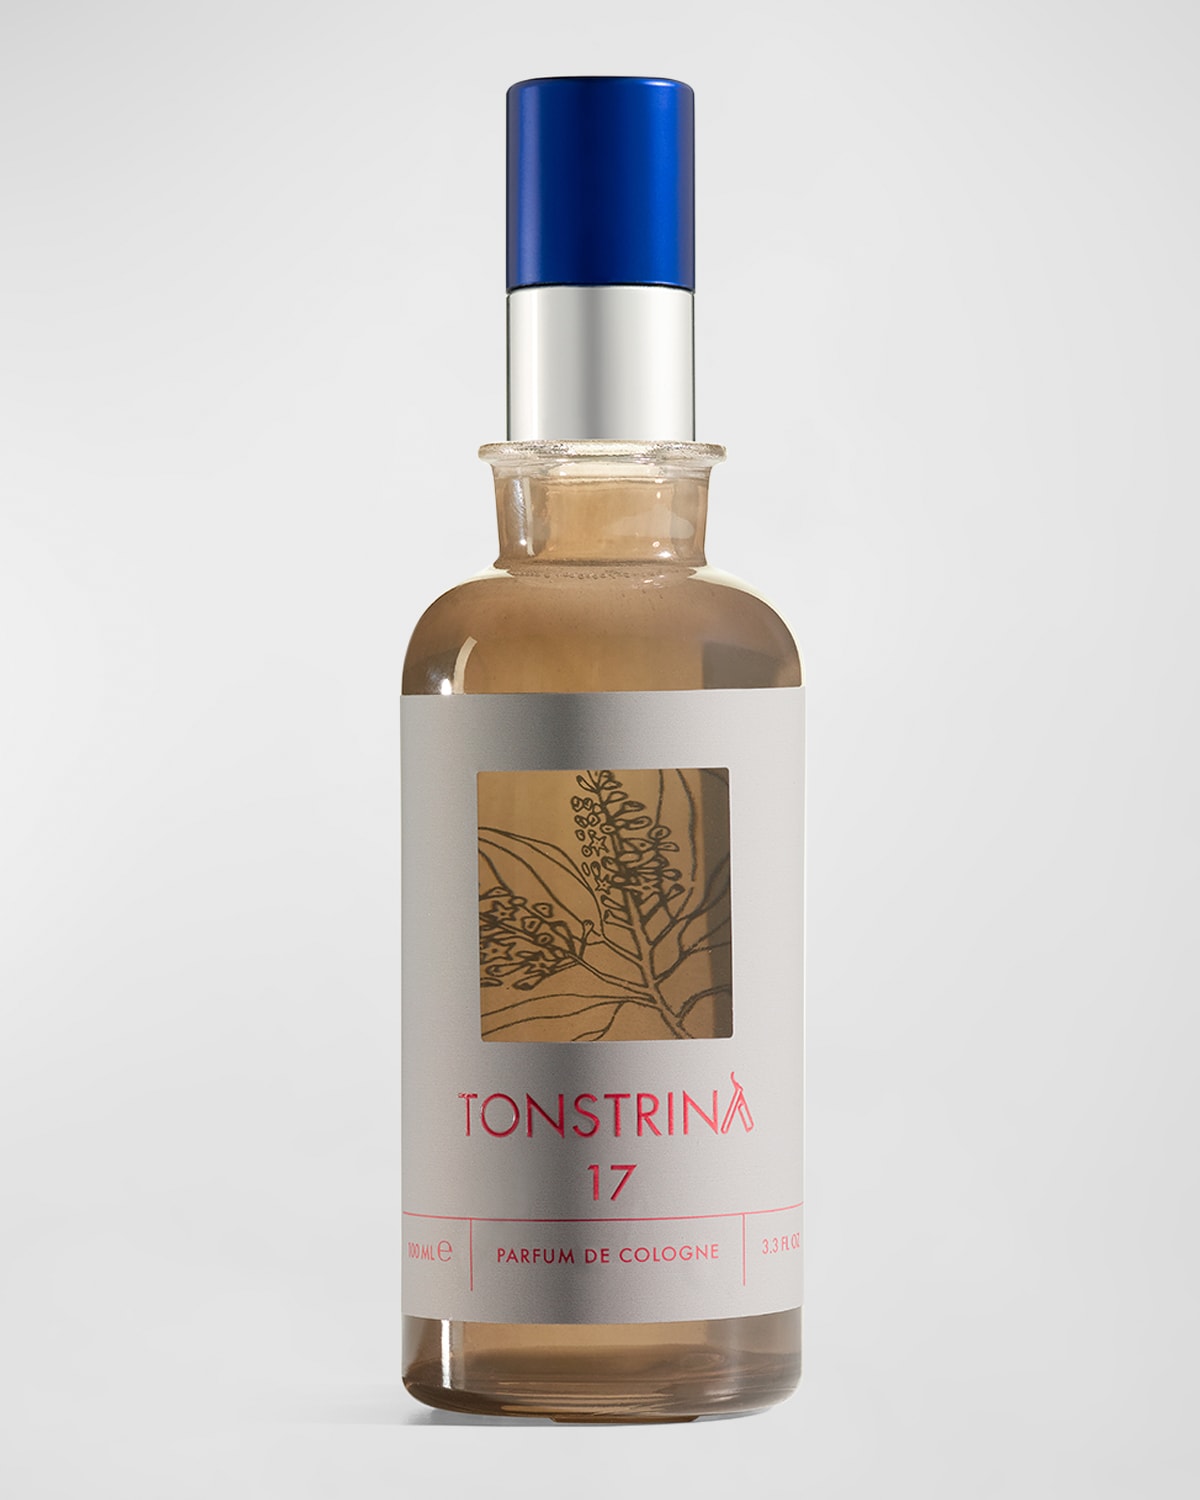 Tonstrina 17 Parfum de Cologne, 3.3 oz.